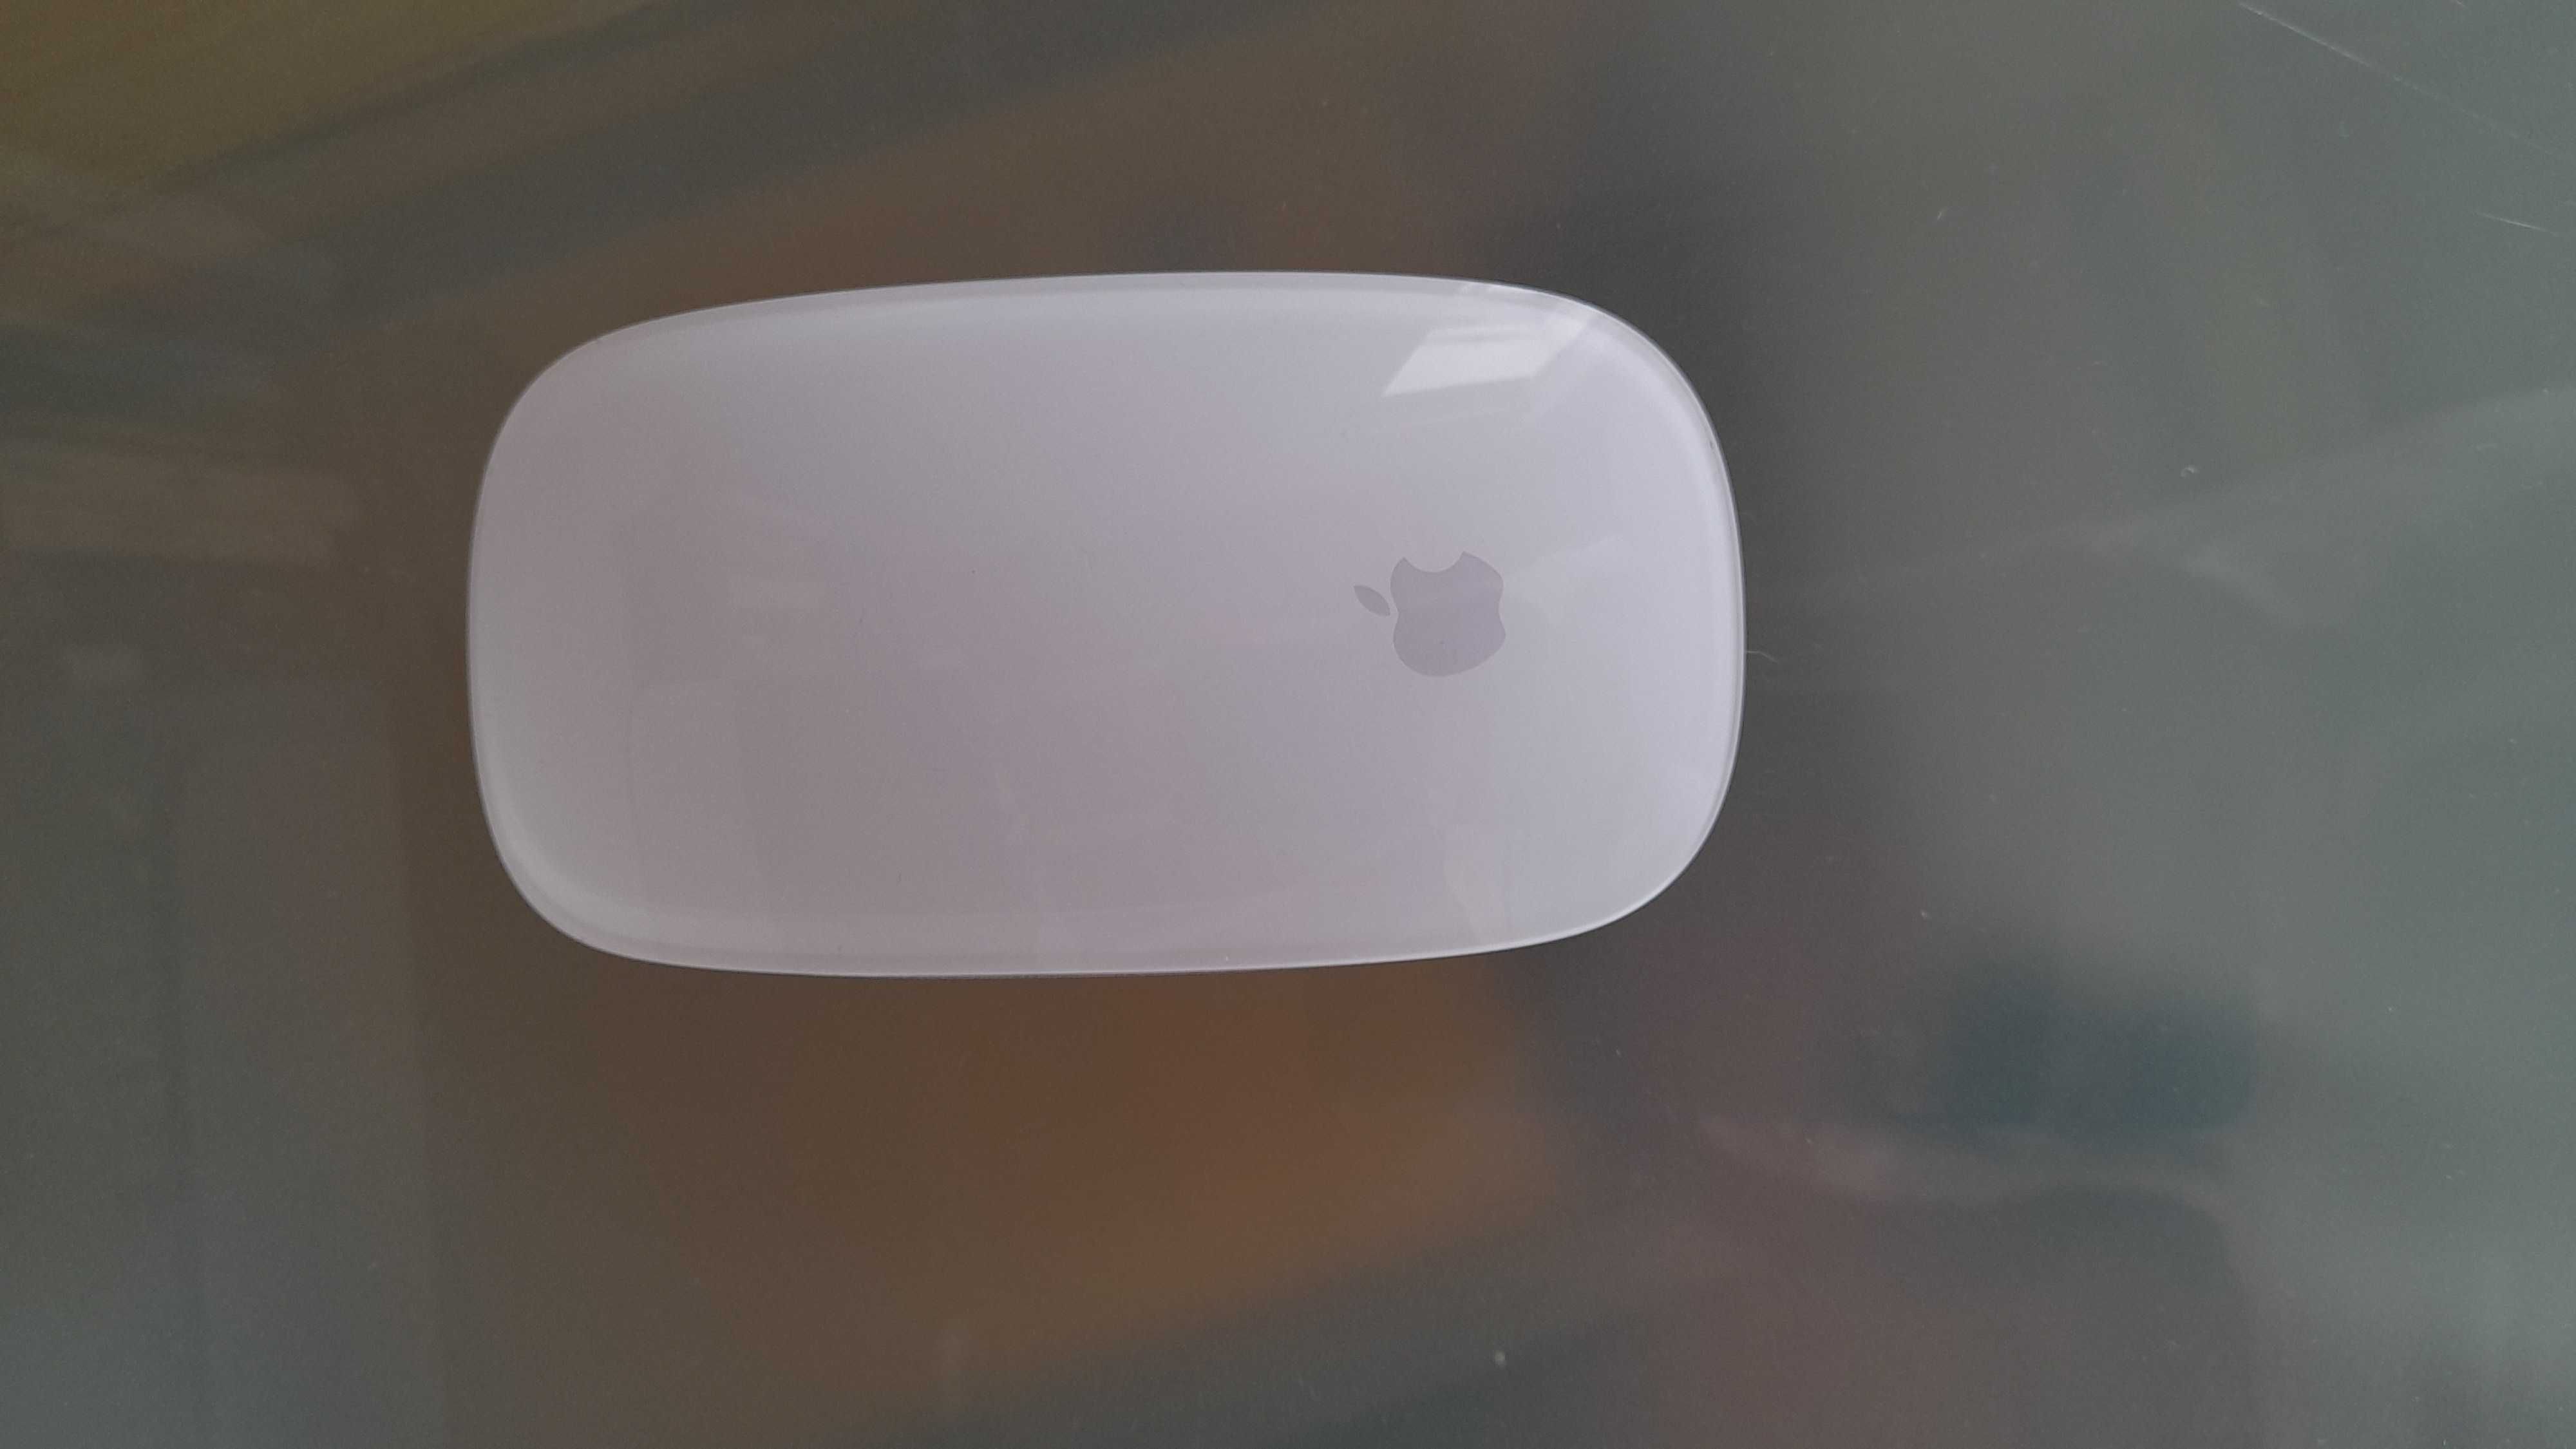 Apple iMac 21,5 inch, 2017